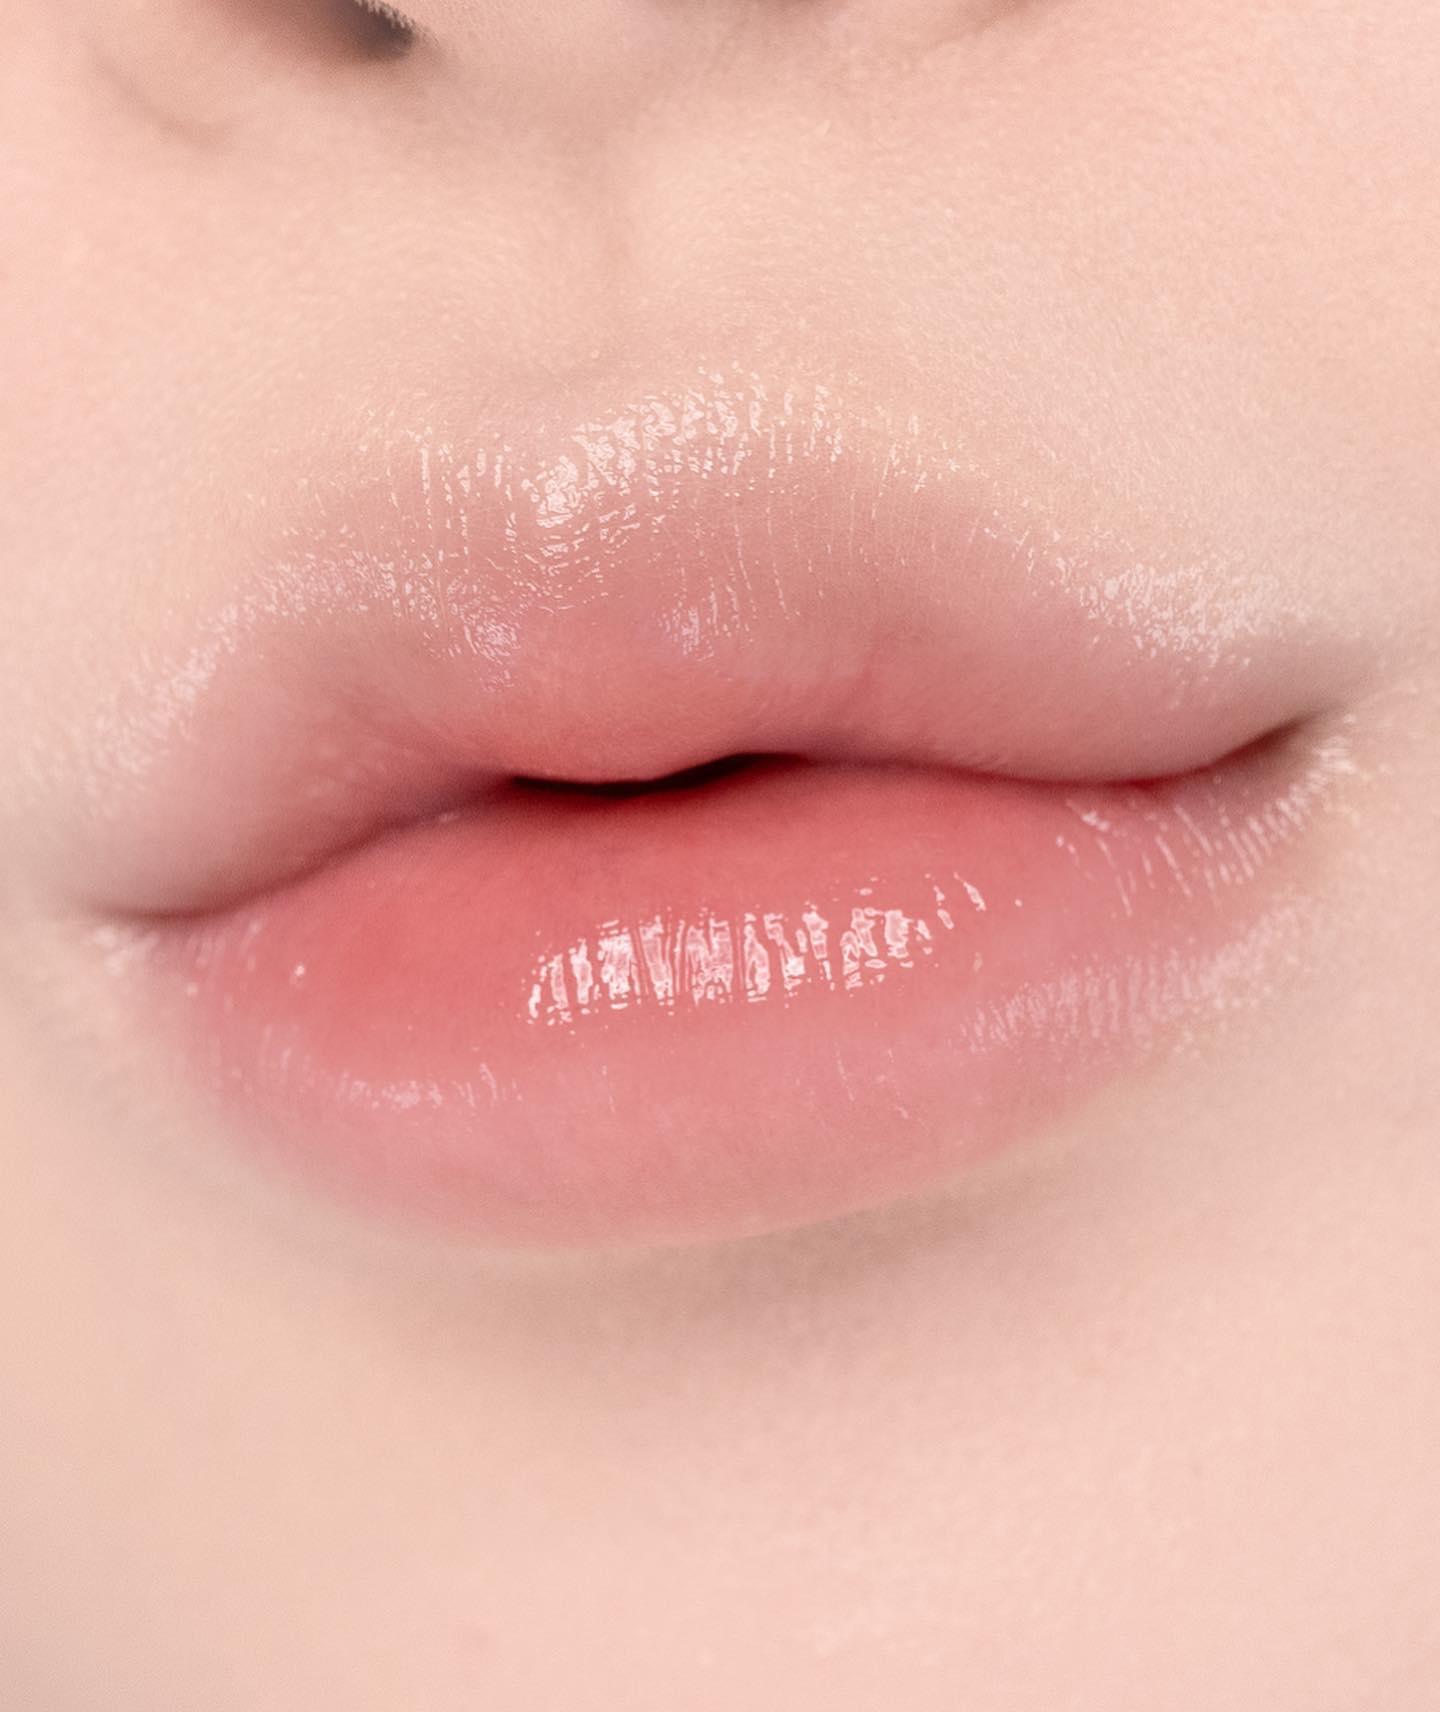 Son Espoir Lipstick Nowear Capsule Dirty Neon - Kallos Vietnam